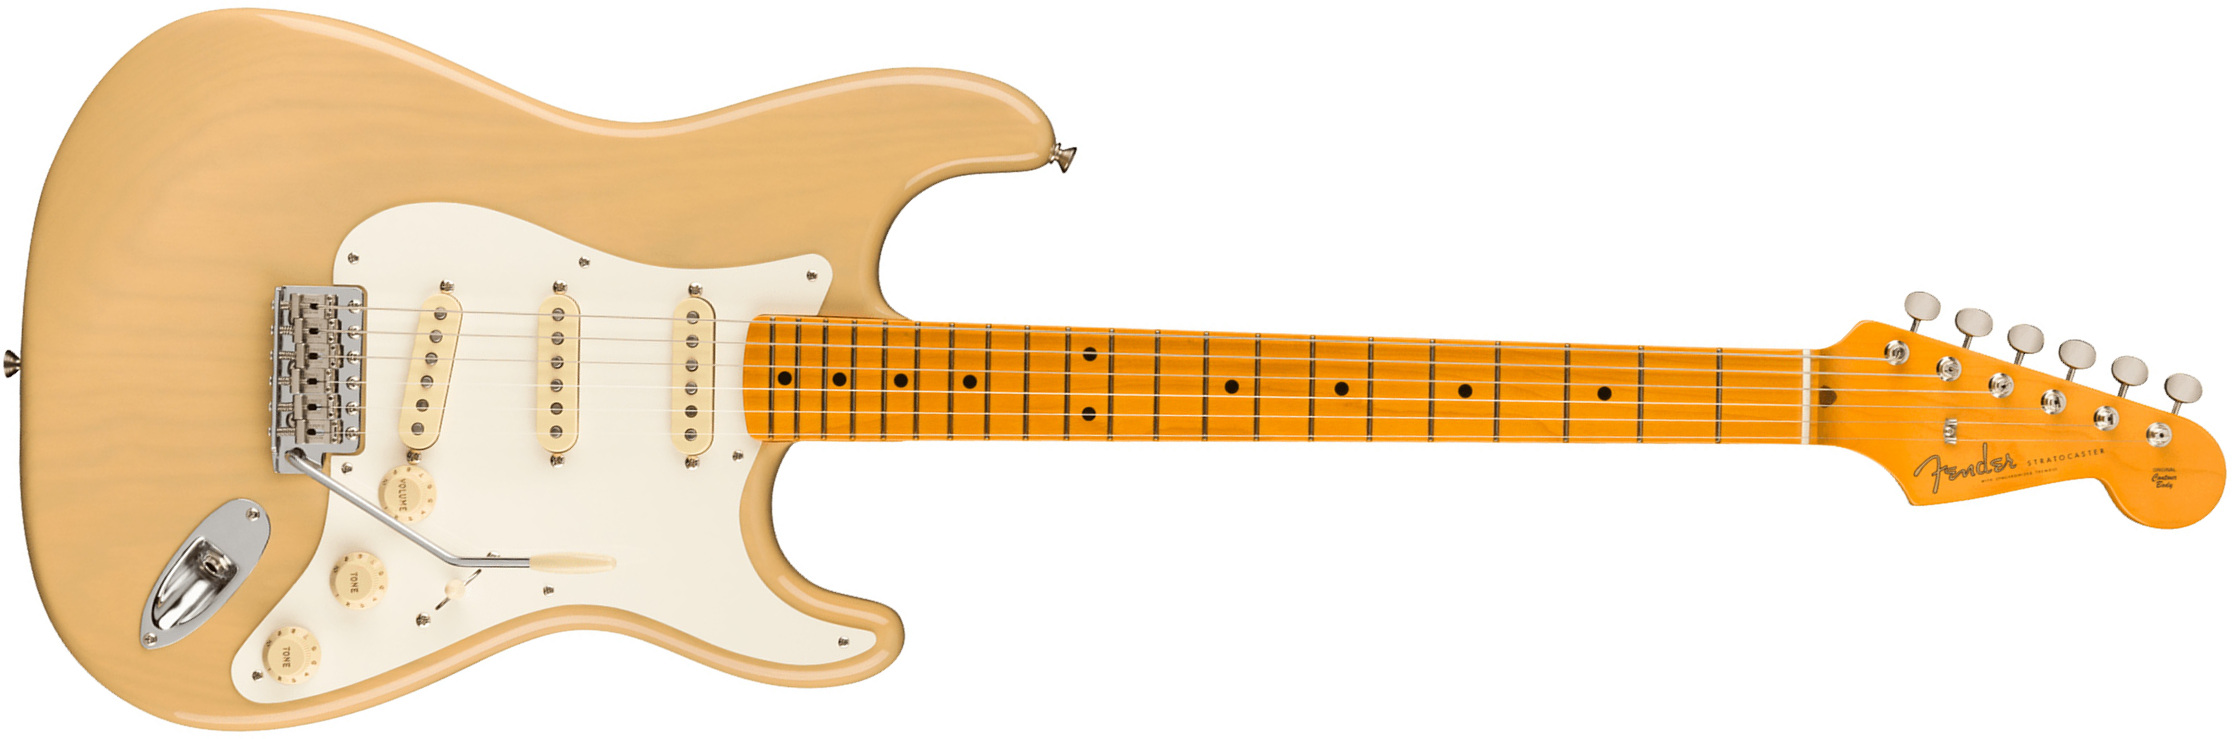 Fender Strat 1957 American Vintage Ii Usa 3s Trem Mn - Vintage Blonde - Elektrische gitaar in Str-vorm - Main picture